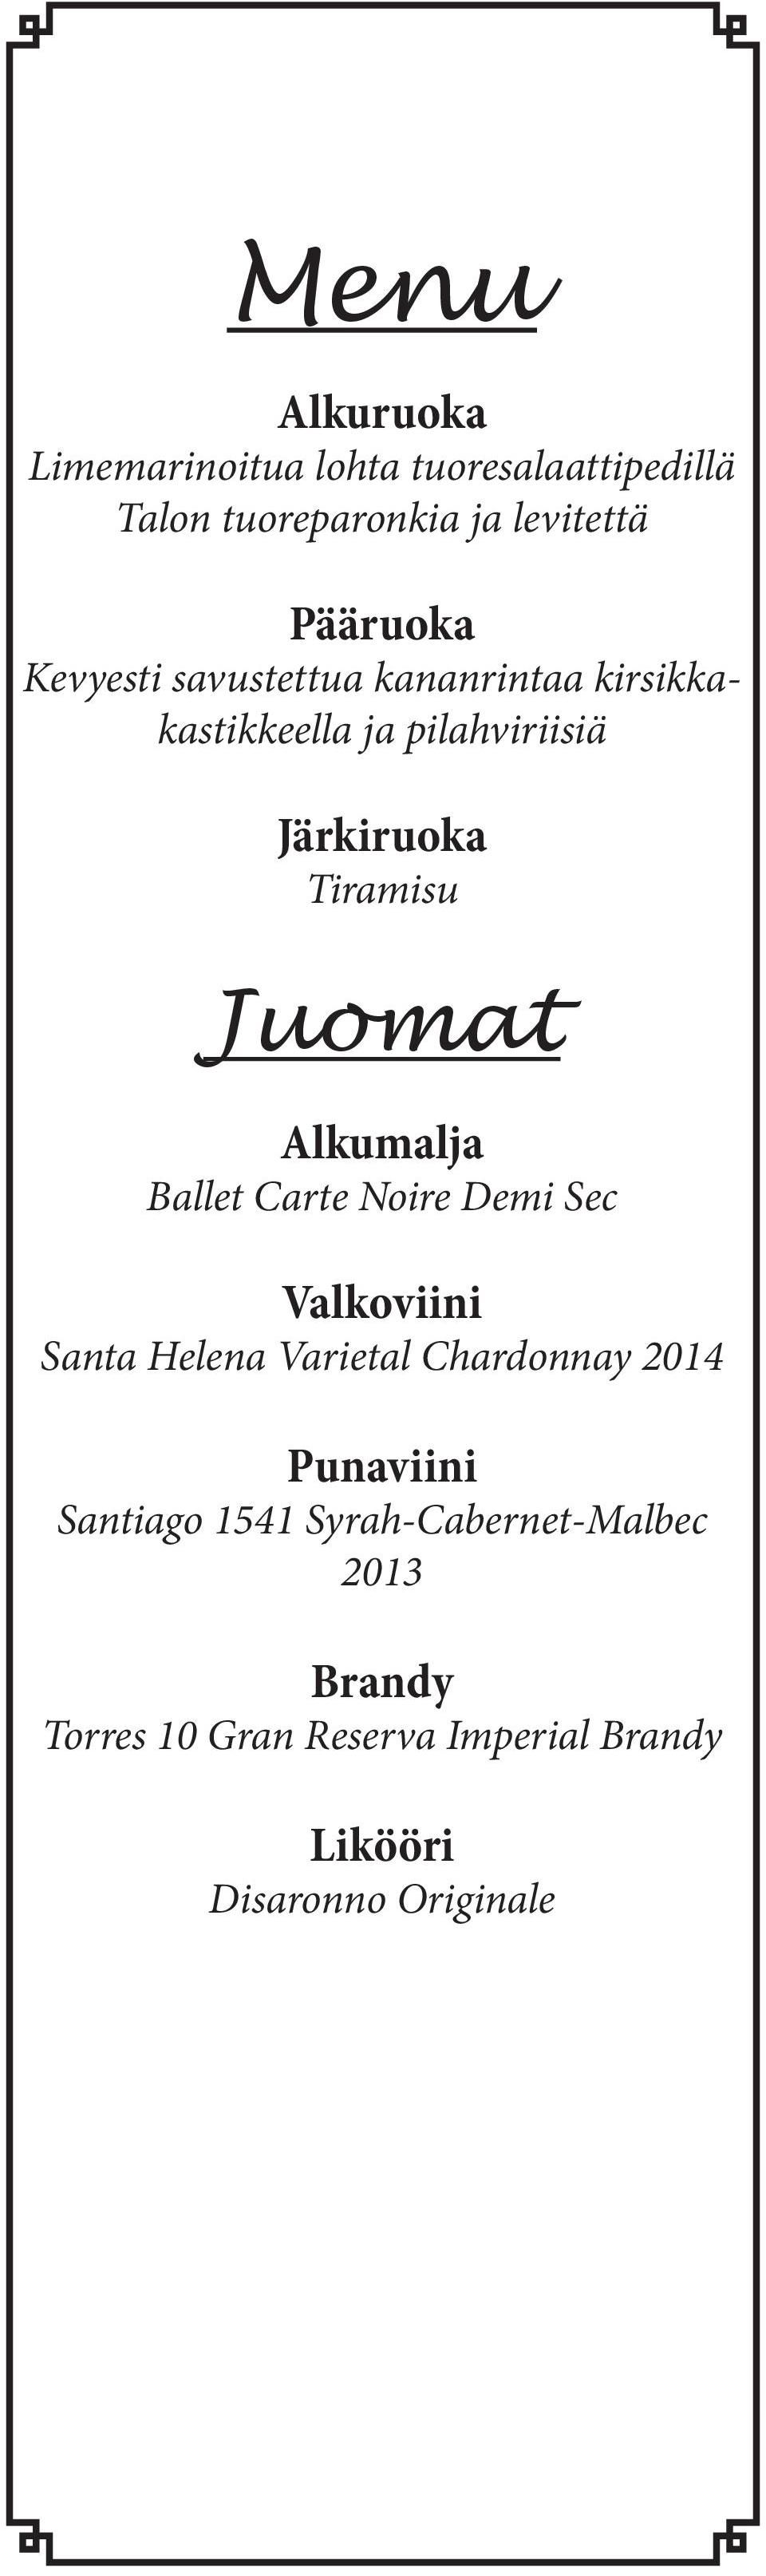 Alkumalja Ballet Carte Noire Demi Sec Valkoviini Santa Helena Varietal Chardonnay 2014 Punaviini